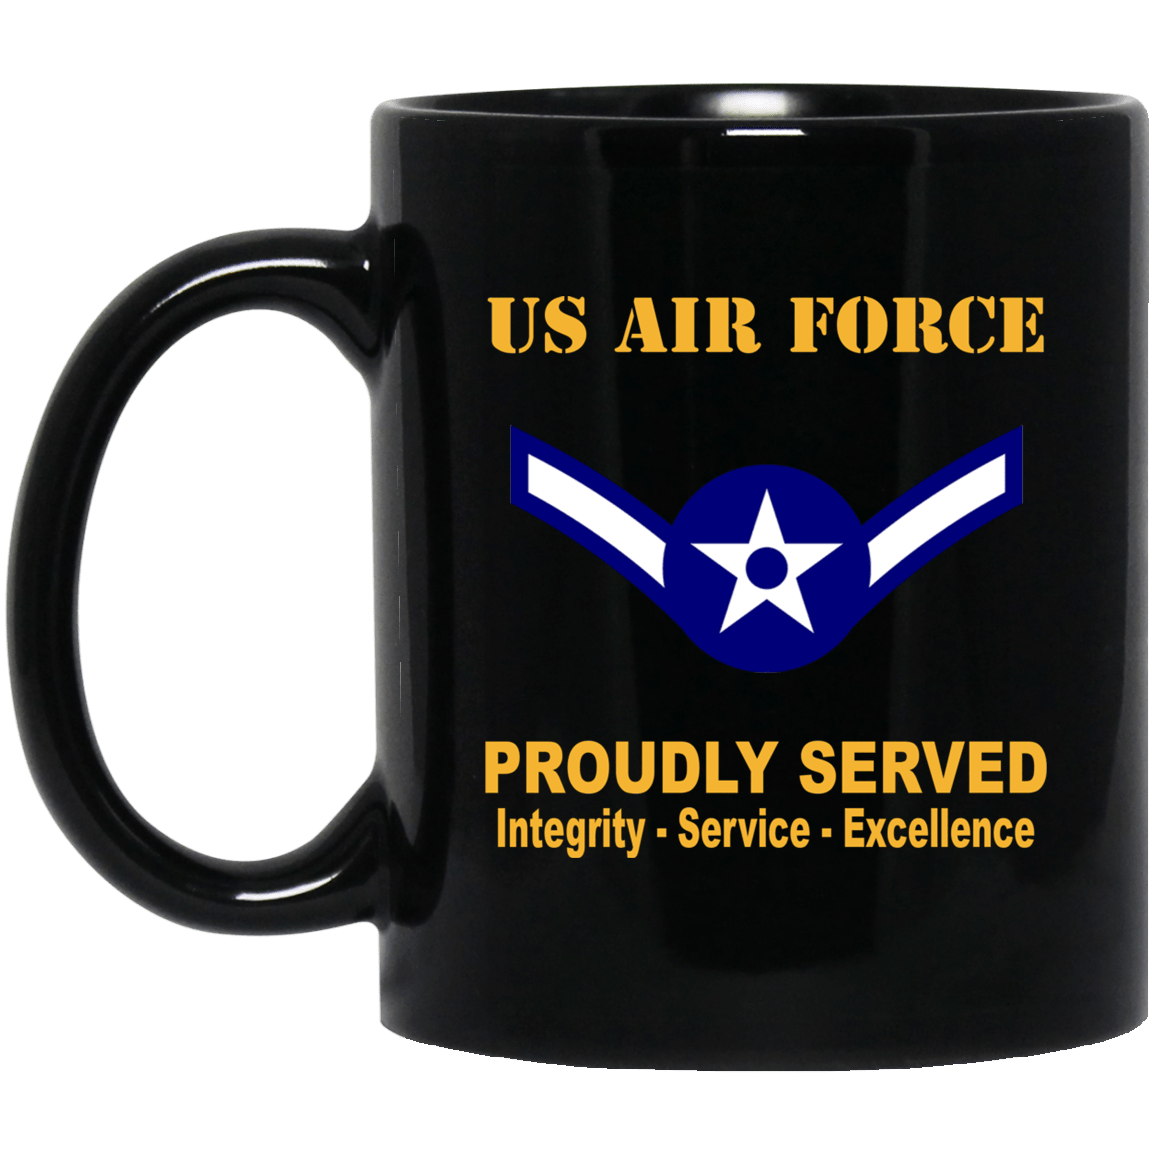 US Air Force E-2 Airman Amn E2 Ranks Enlisted Airman Rank Proudly Served Black Mug 11 oz - 15 oz-Mug-USAF-Ranks-Veterans Nation